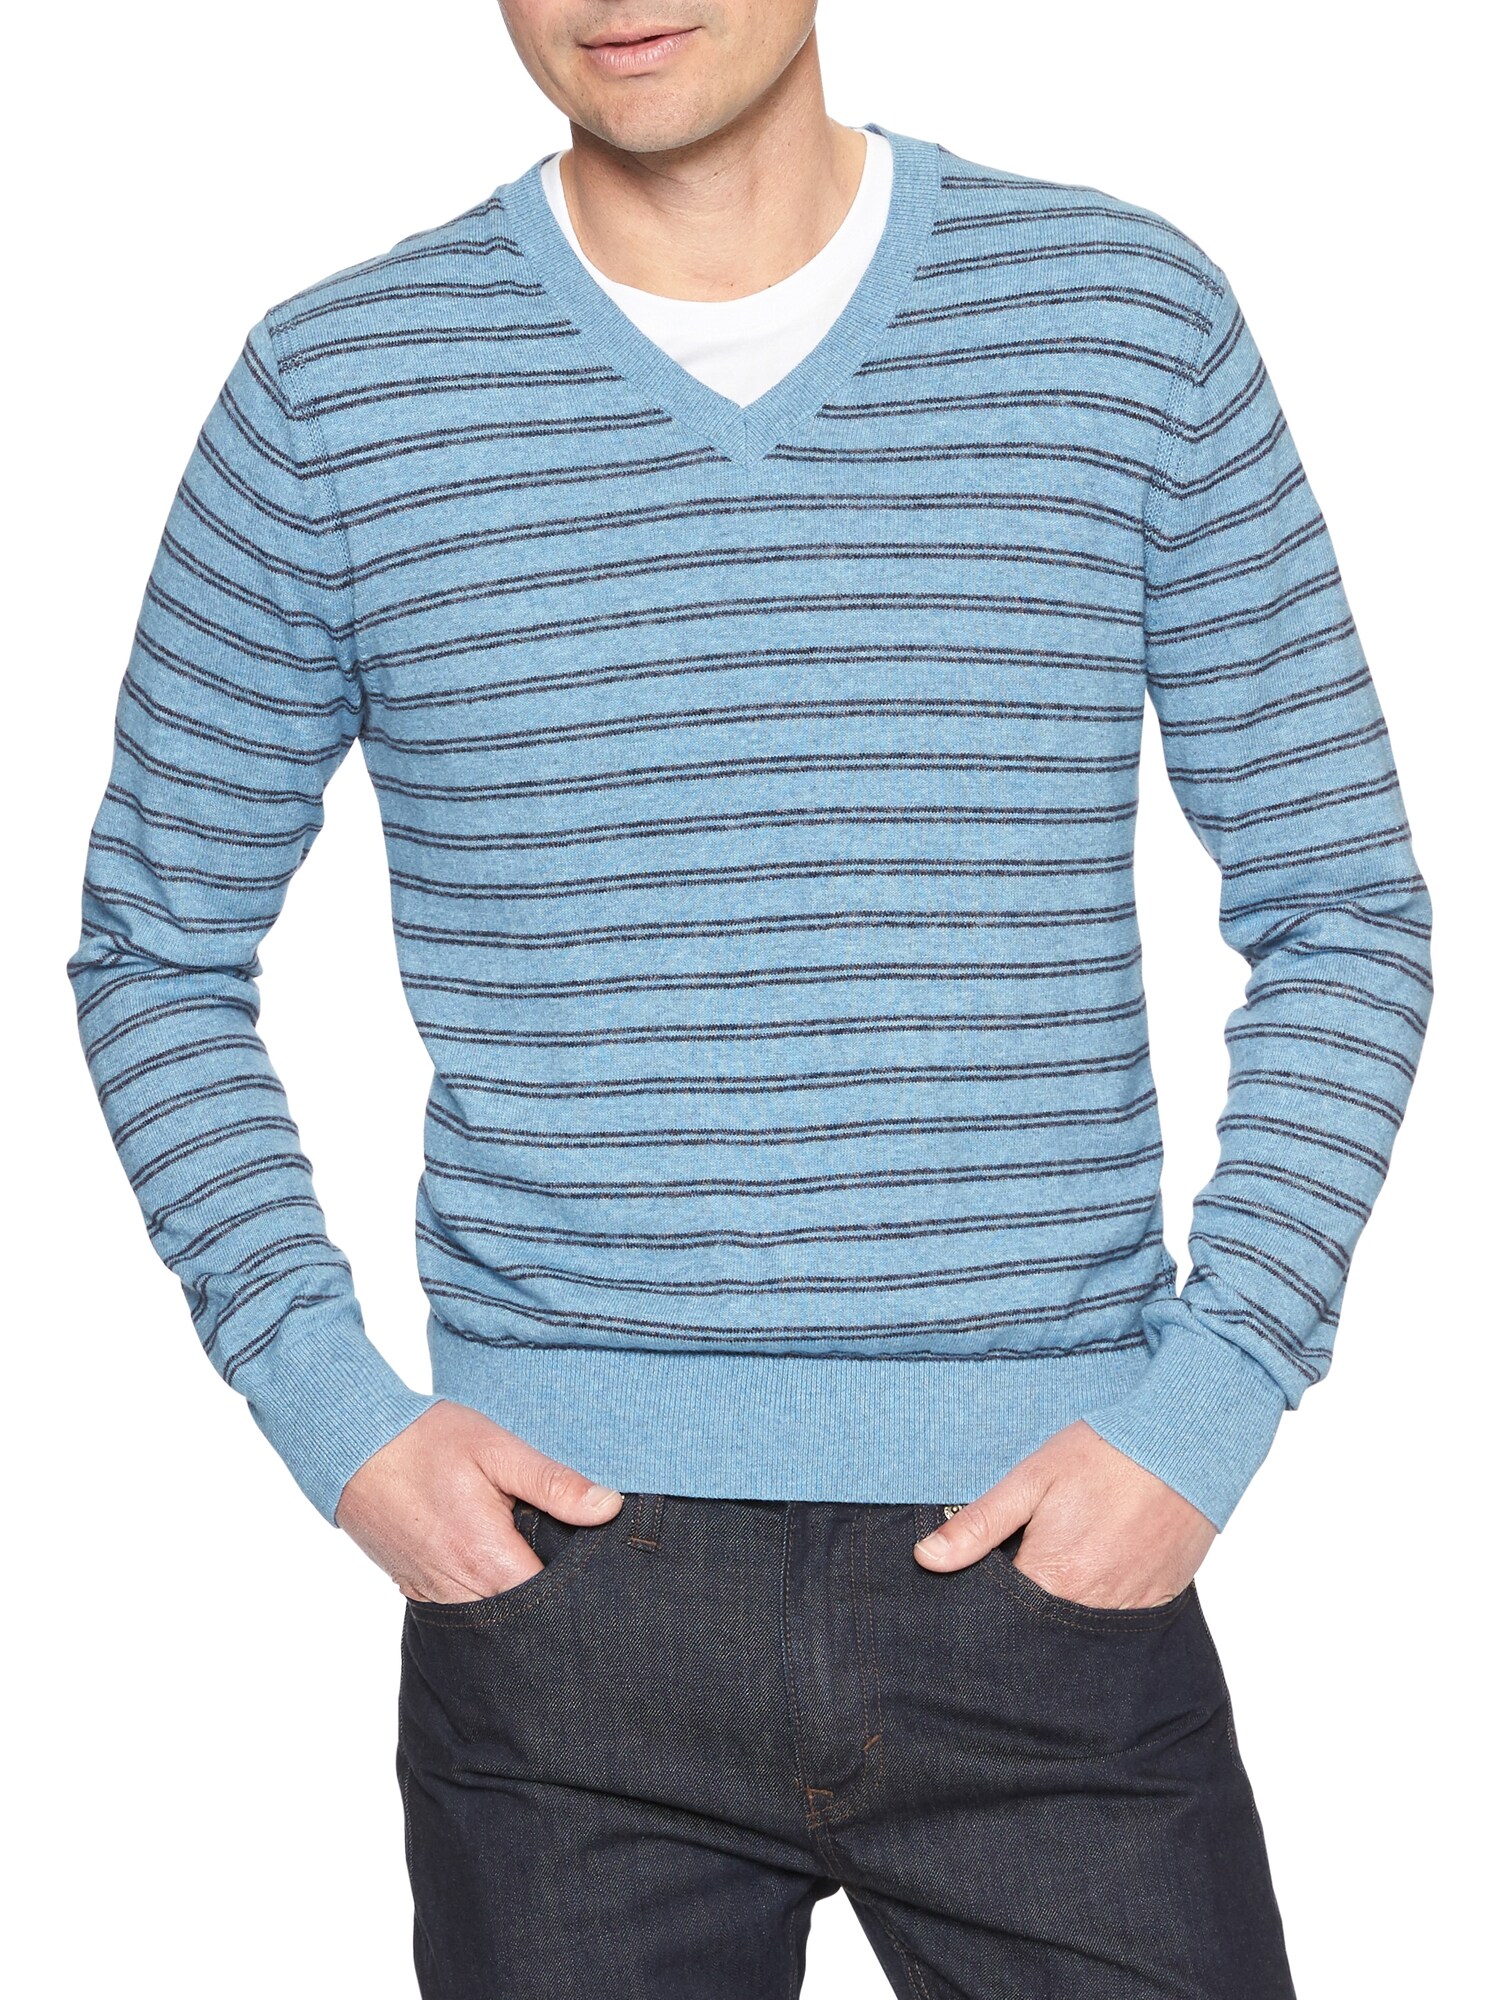 Heather Vee Stripe Sweater